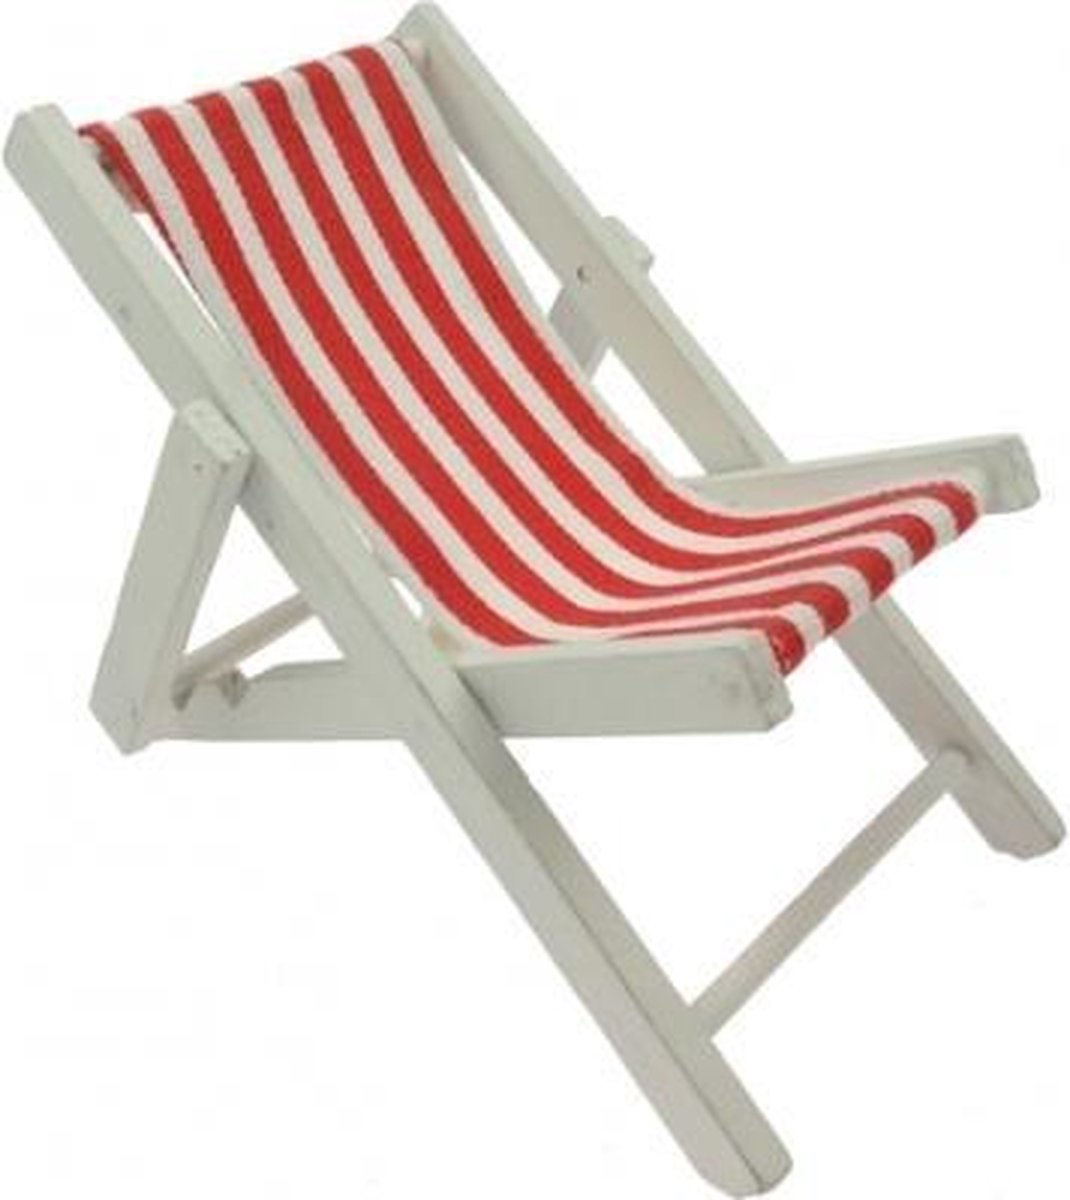 Poppen strandstoel rood/wit gestreept. - accessoires bol.com